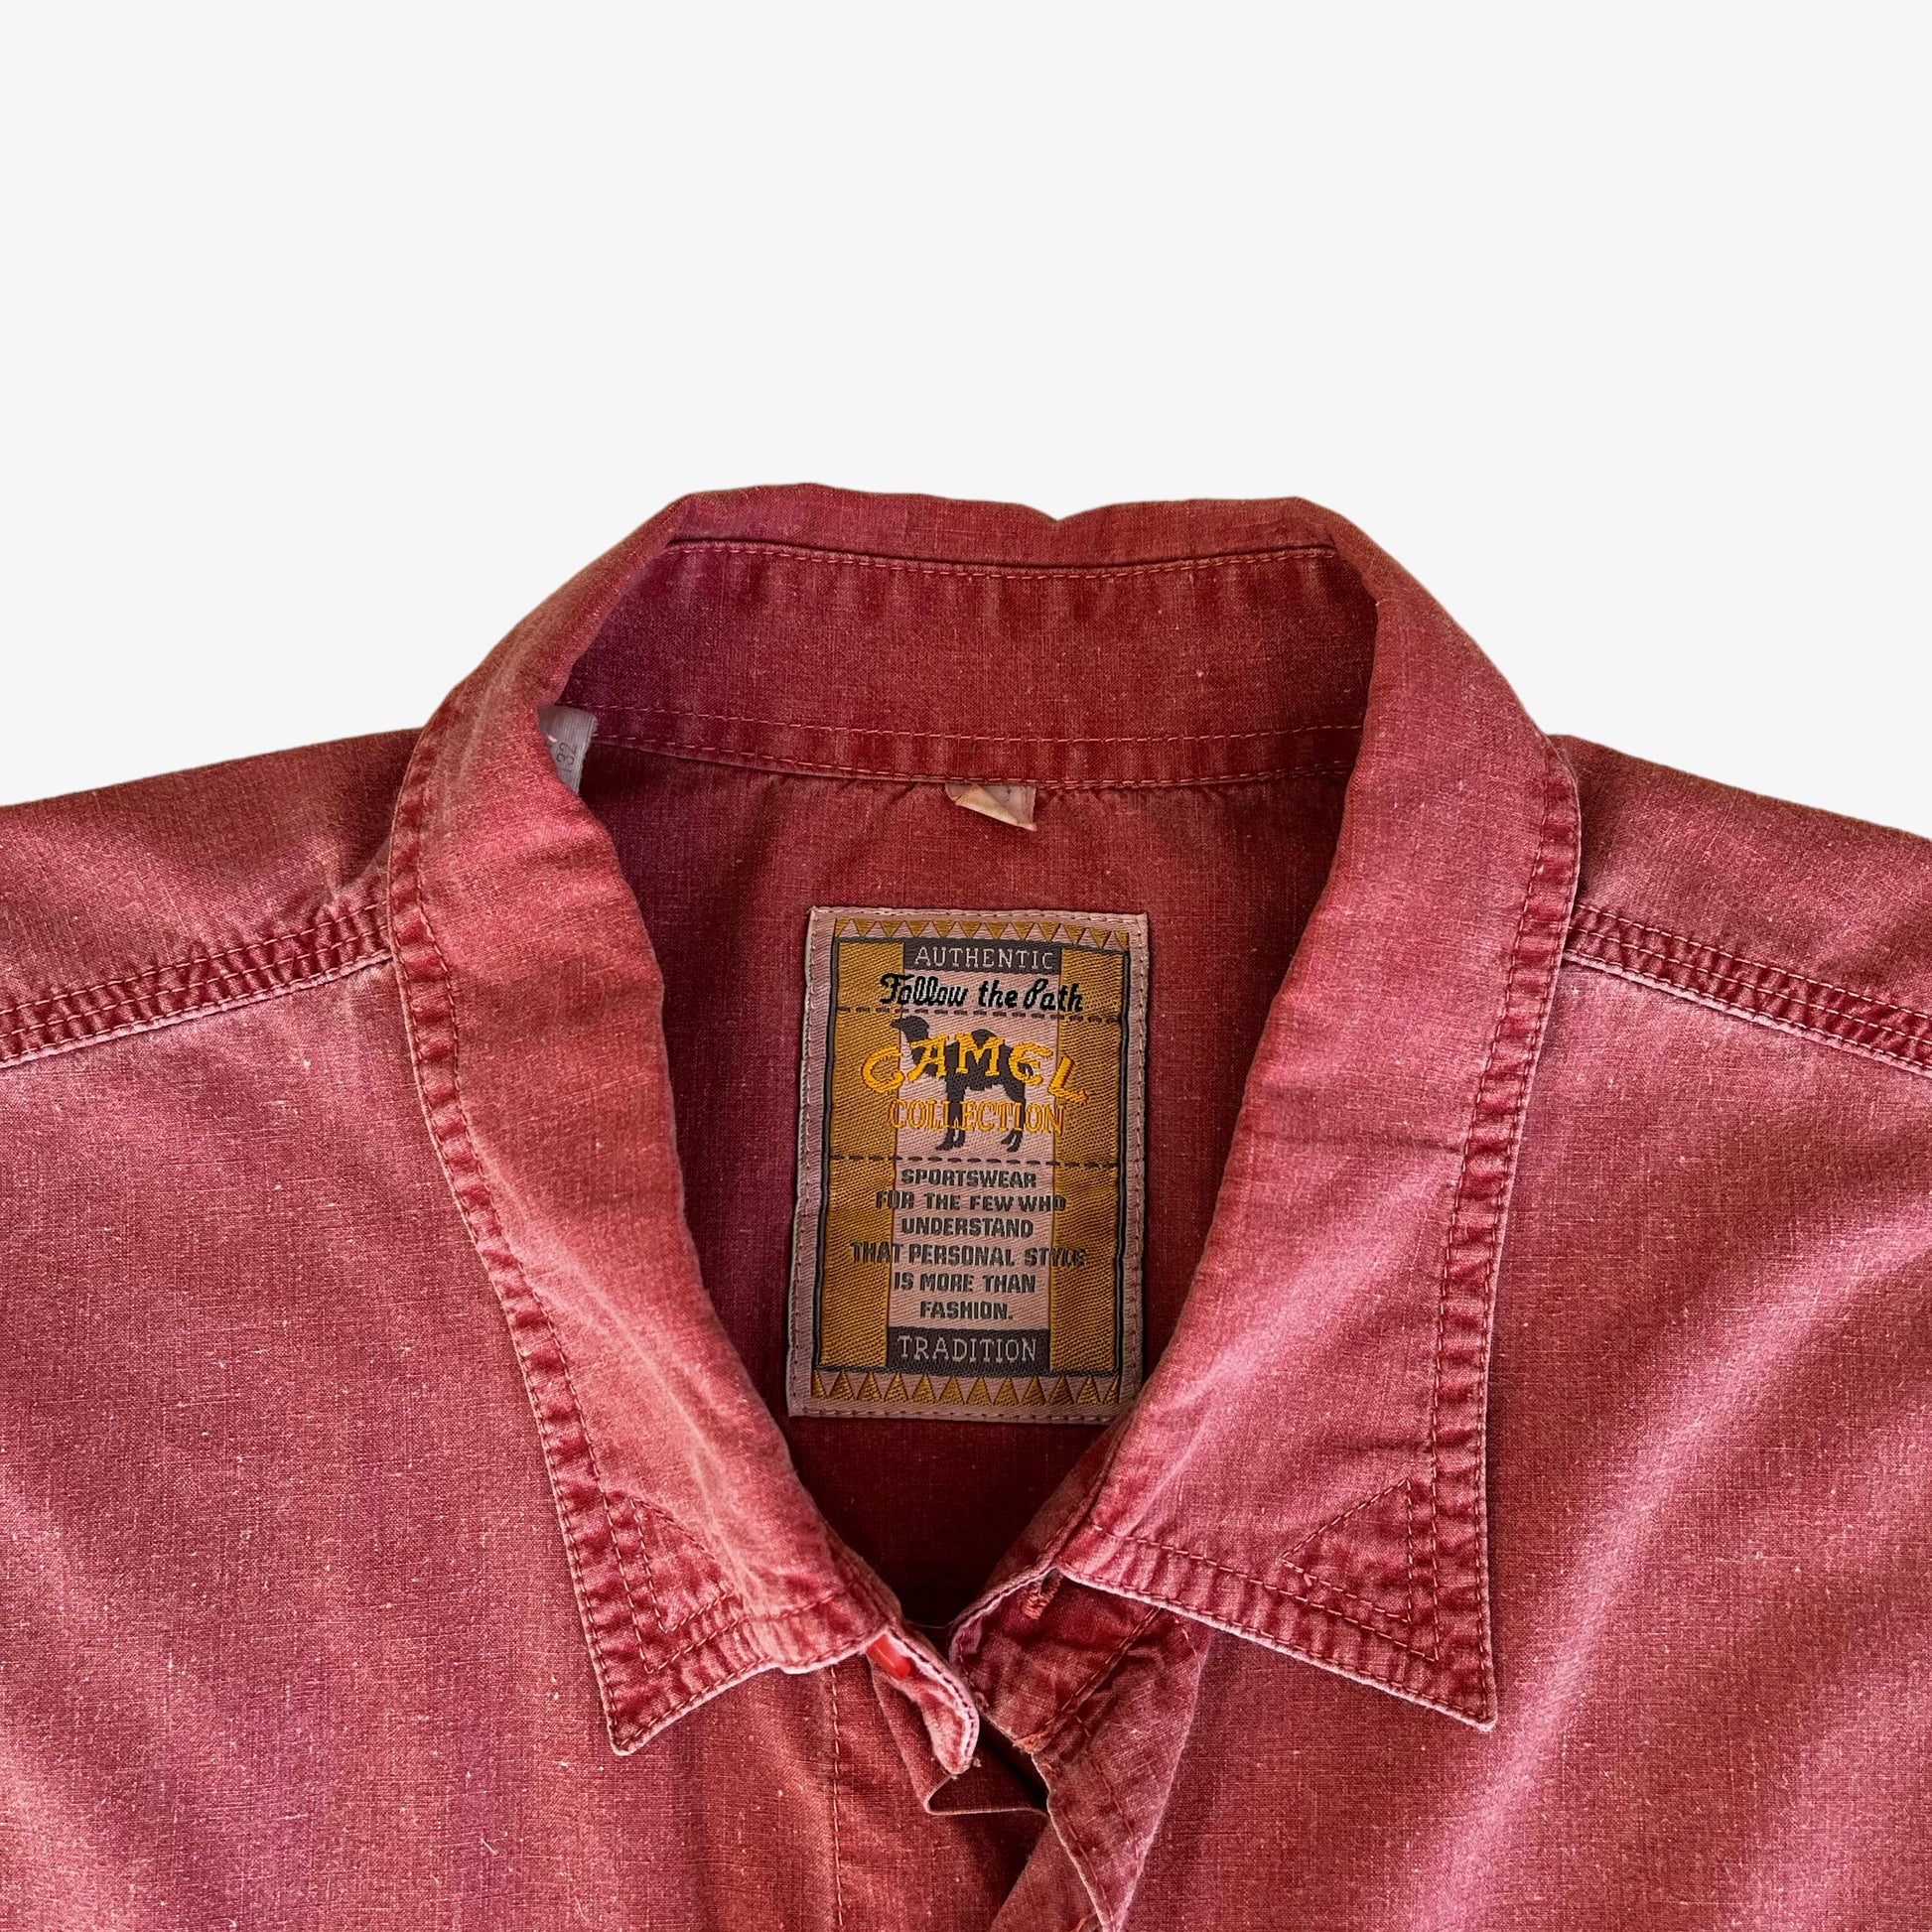 Vintage 90s Camel Cigarettes Pale Red Short Sleeve Shirt Label - Casspios Dream